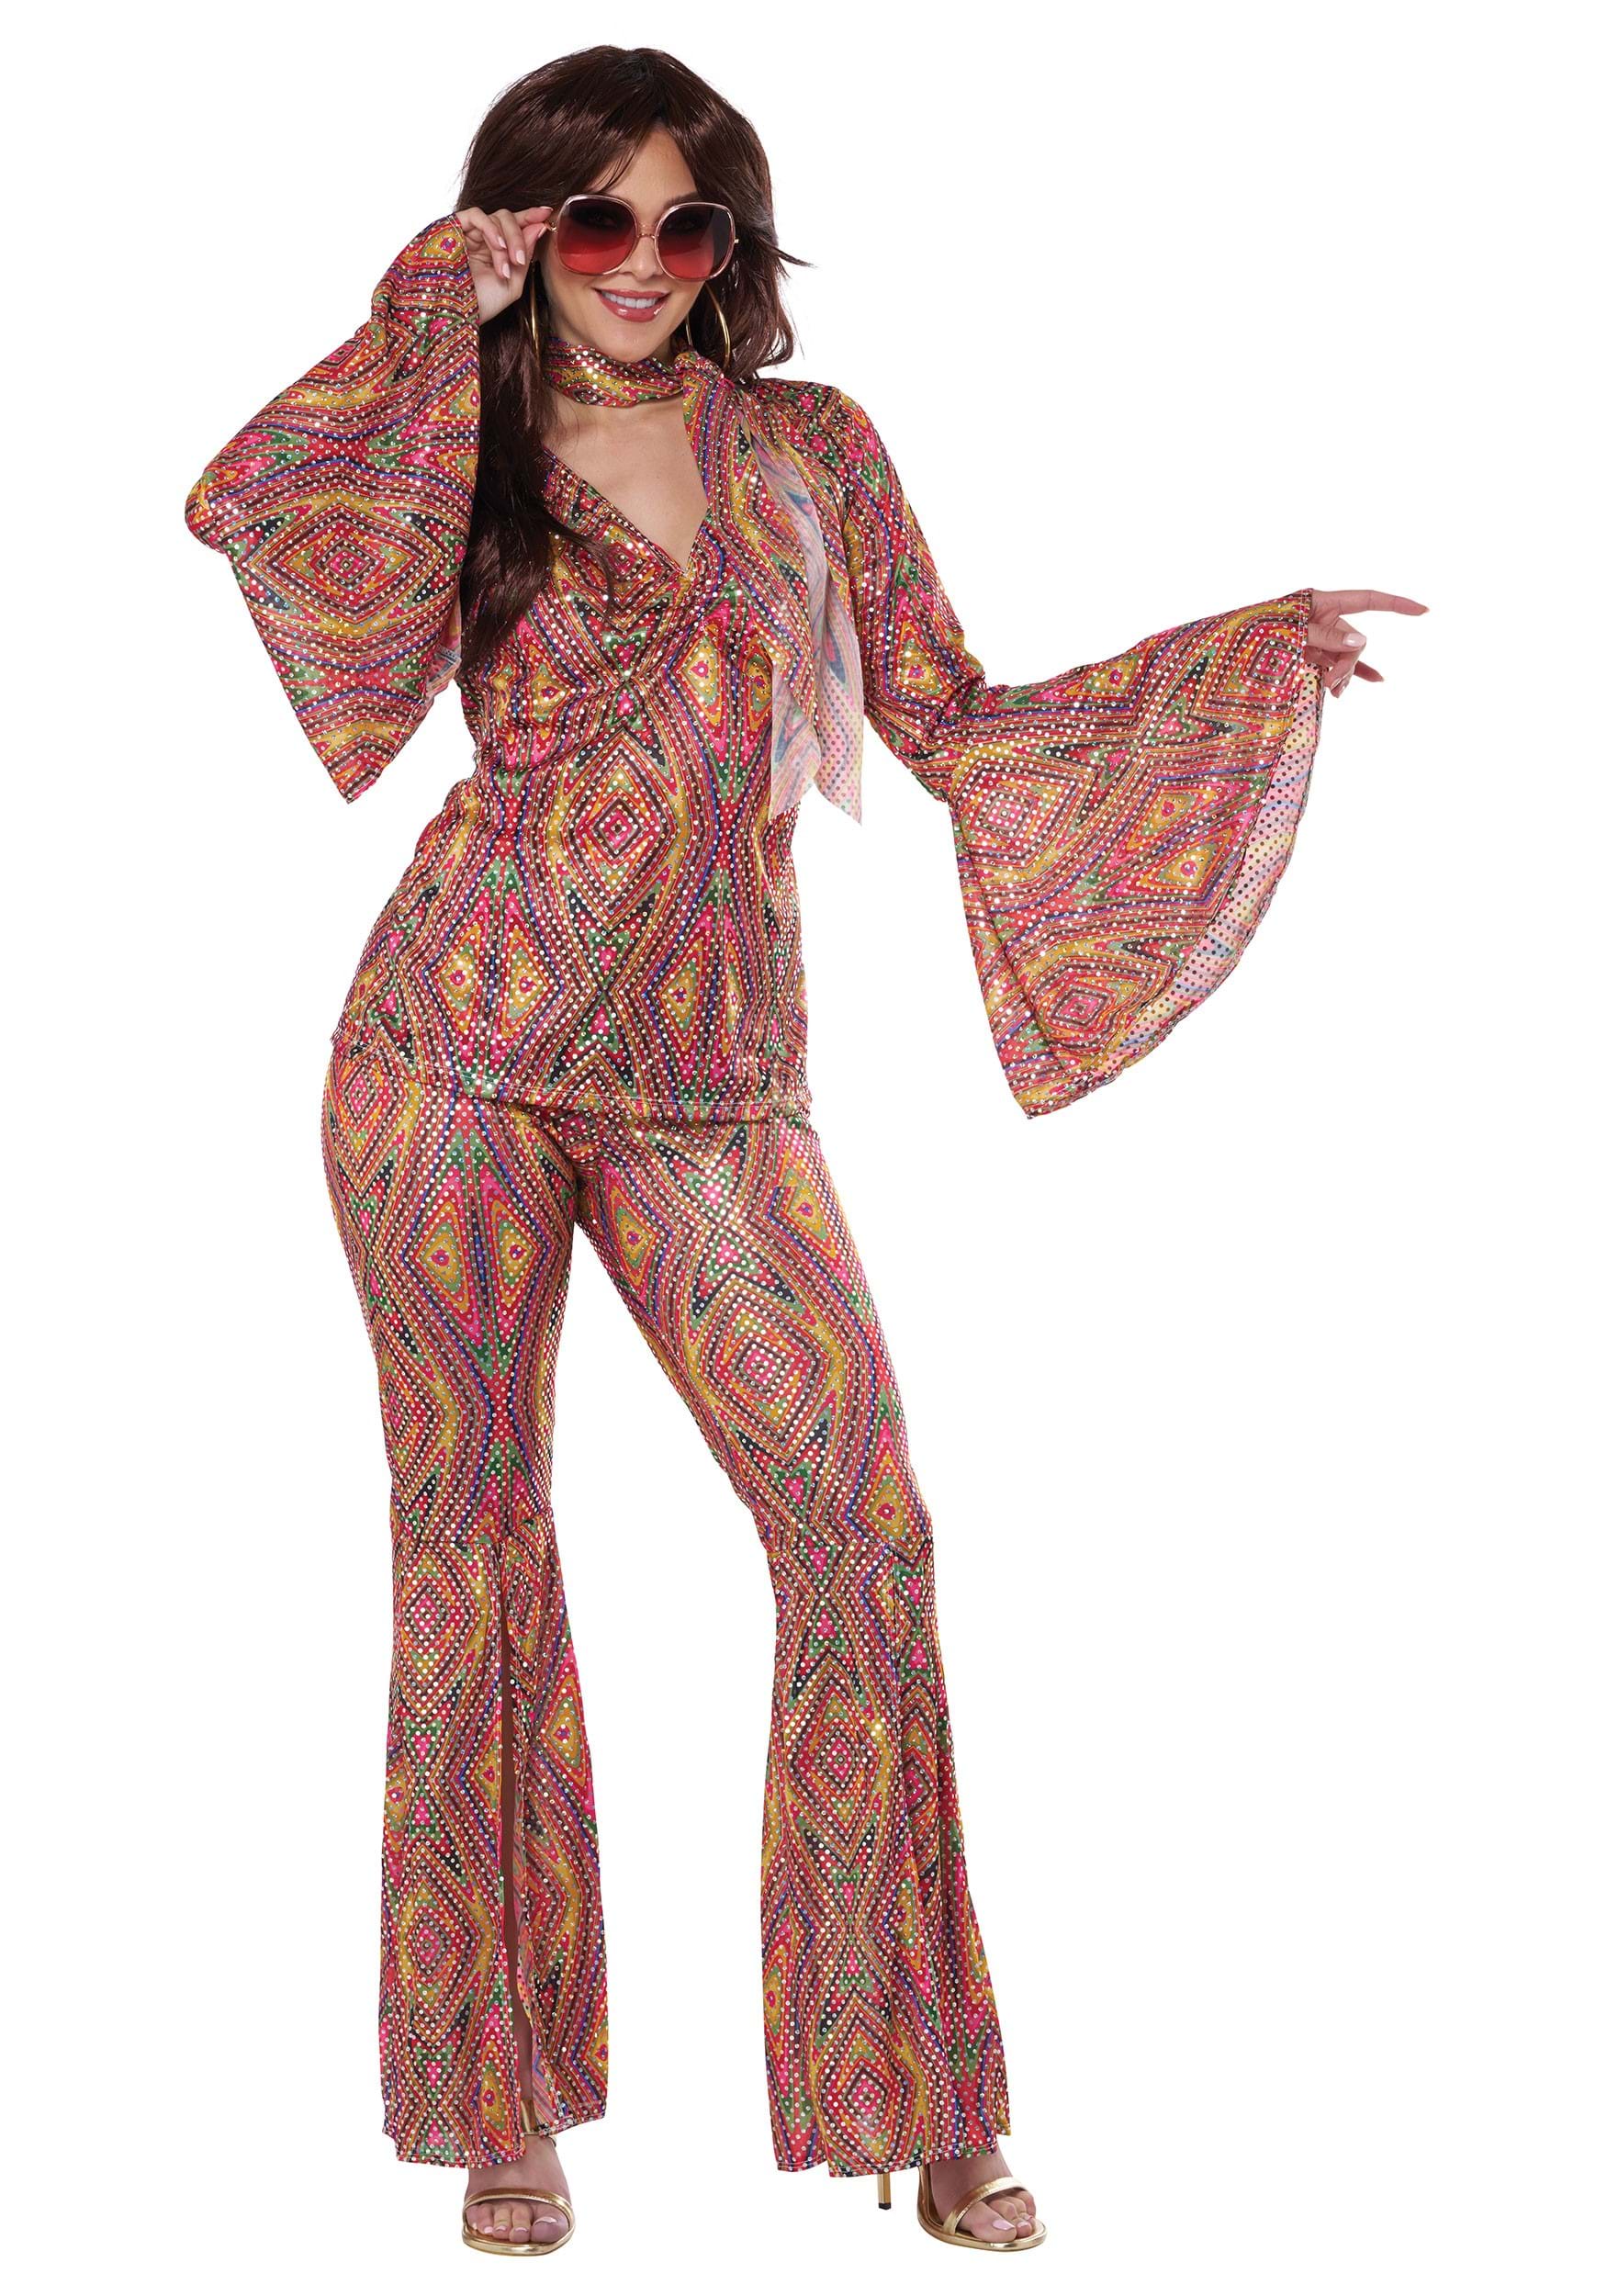 Women's 1970s DiscoLicious Costume , Decade Costumes